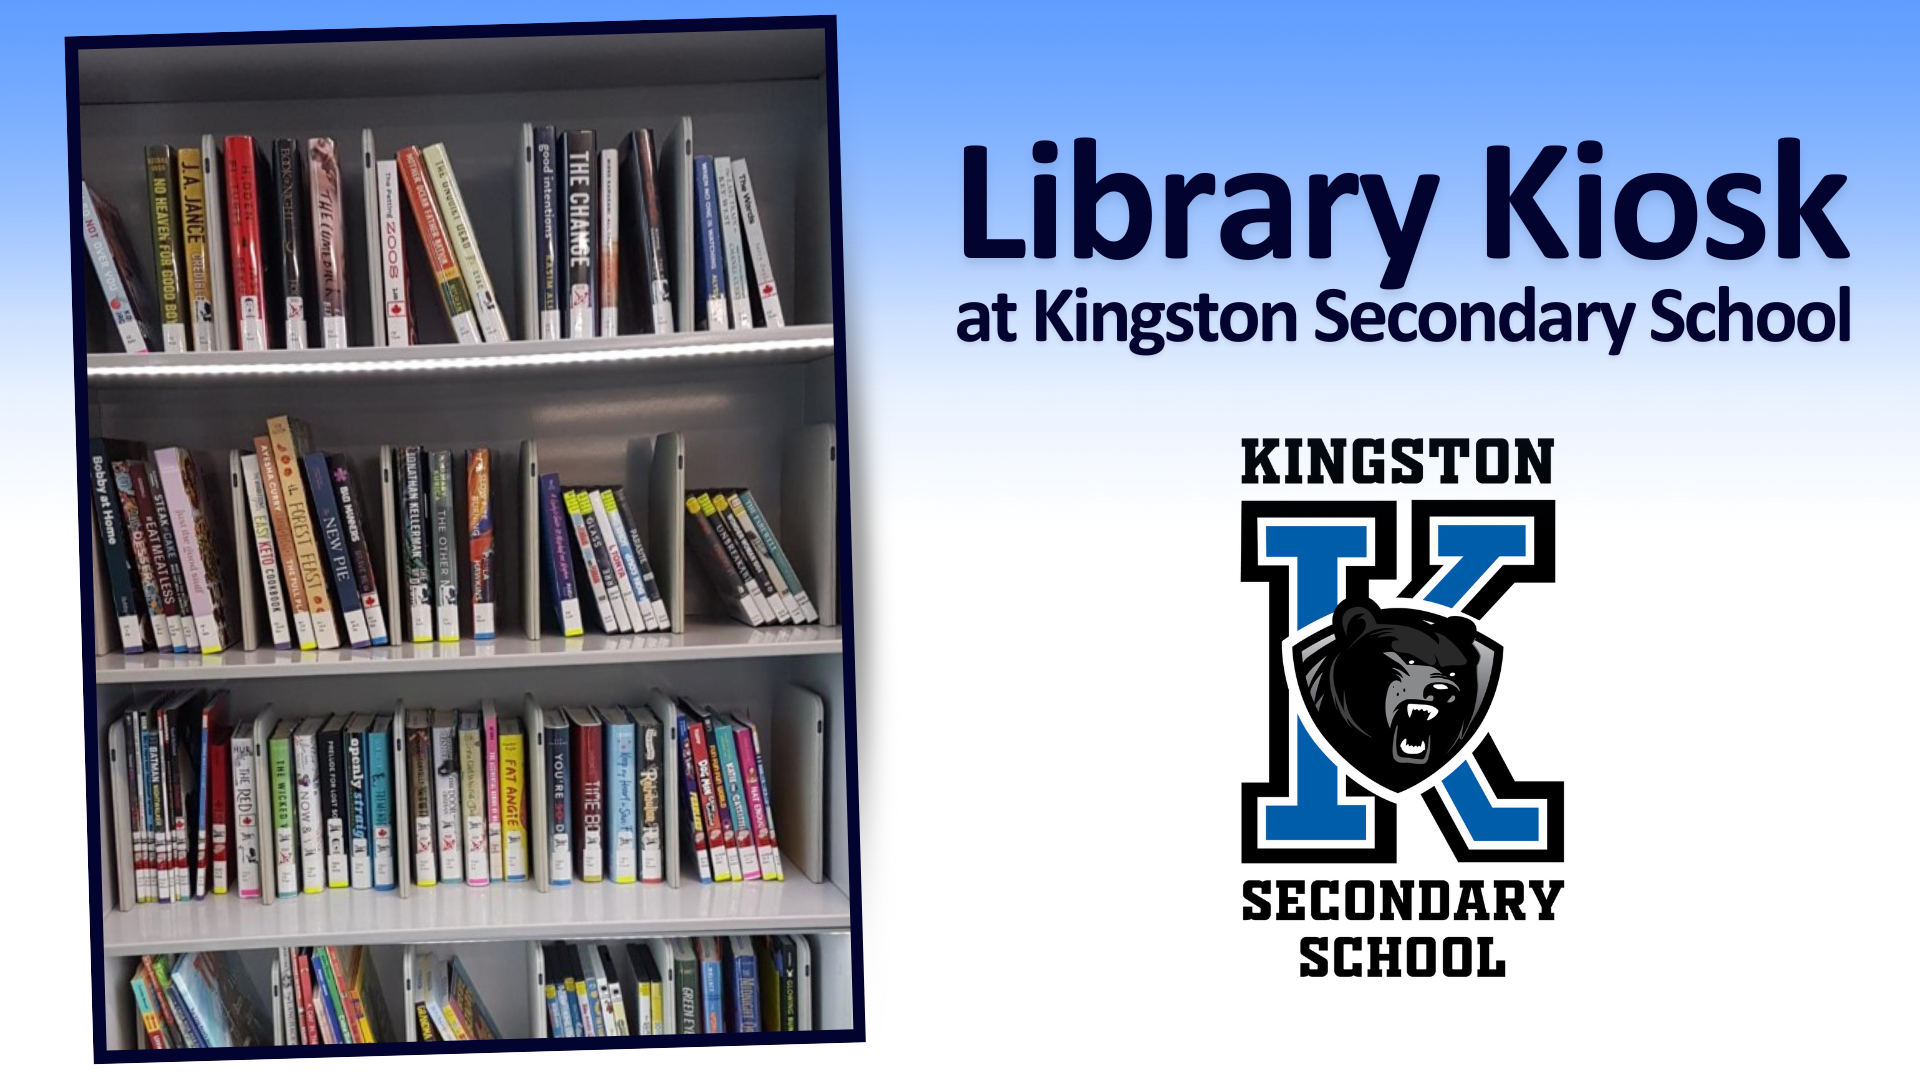 Library Kiosk at kingston secondary school